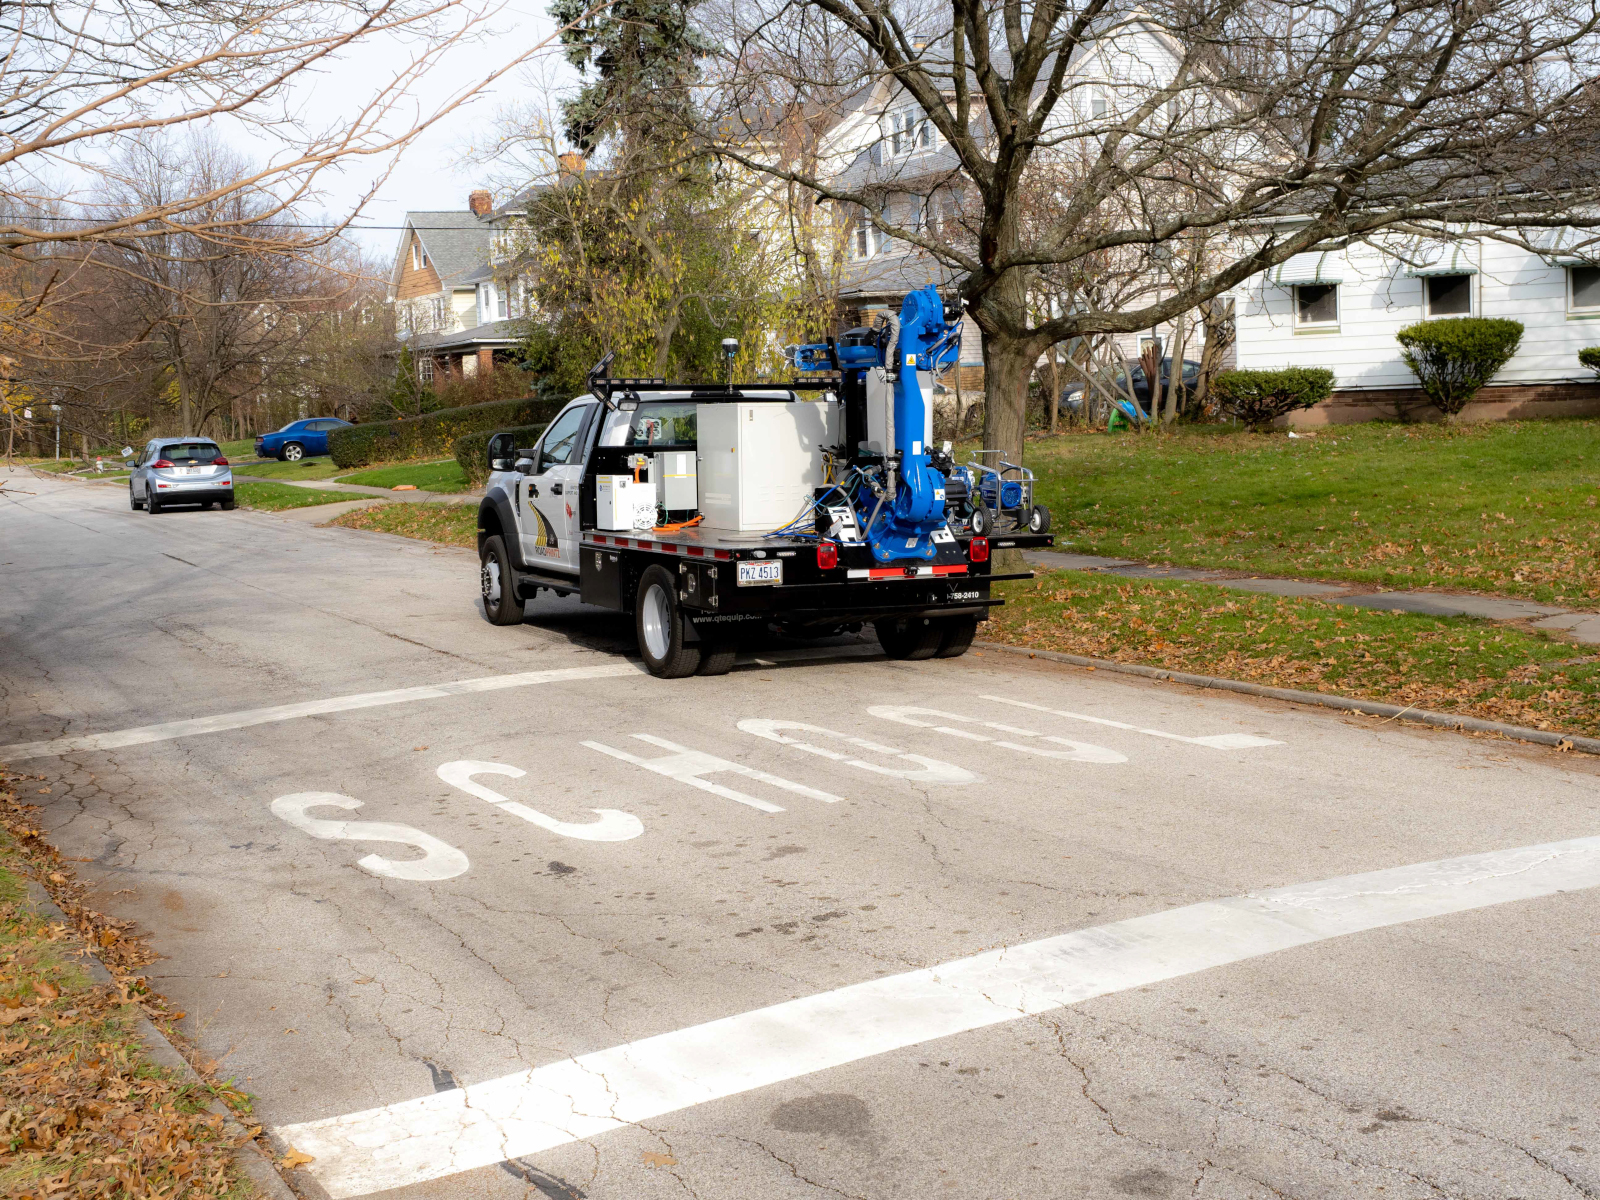 Pavement marking robt truck on residential street; school zone marking